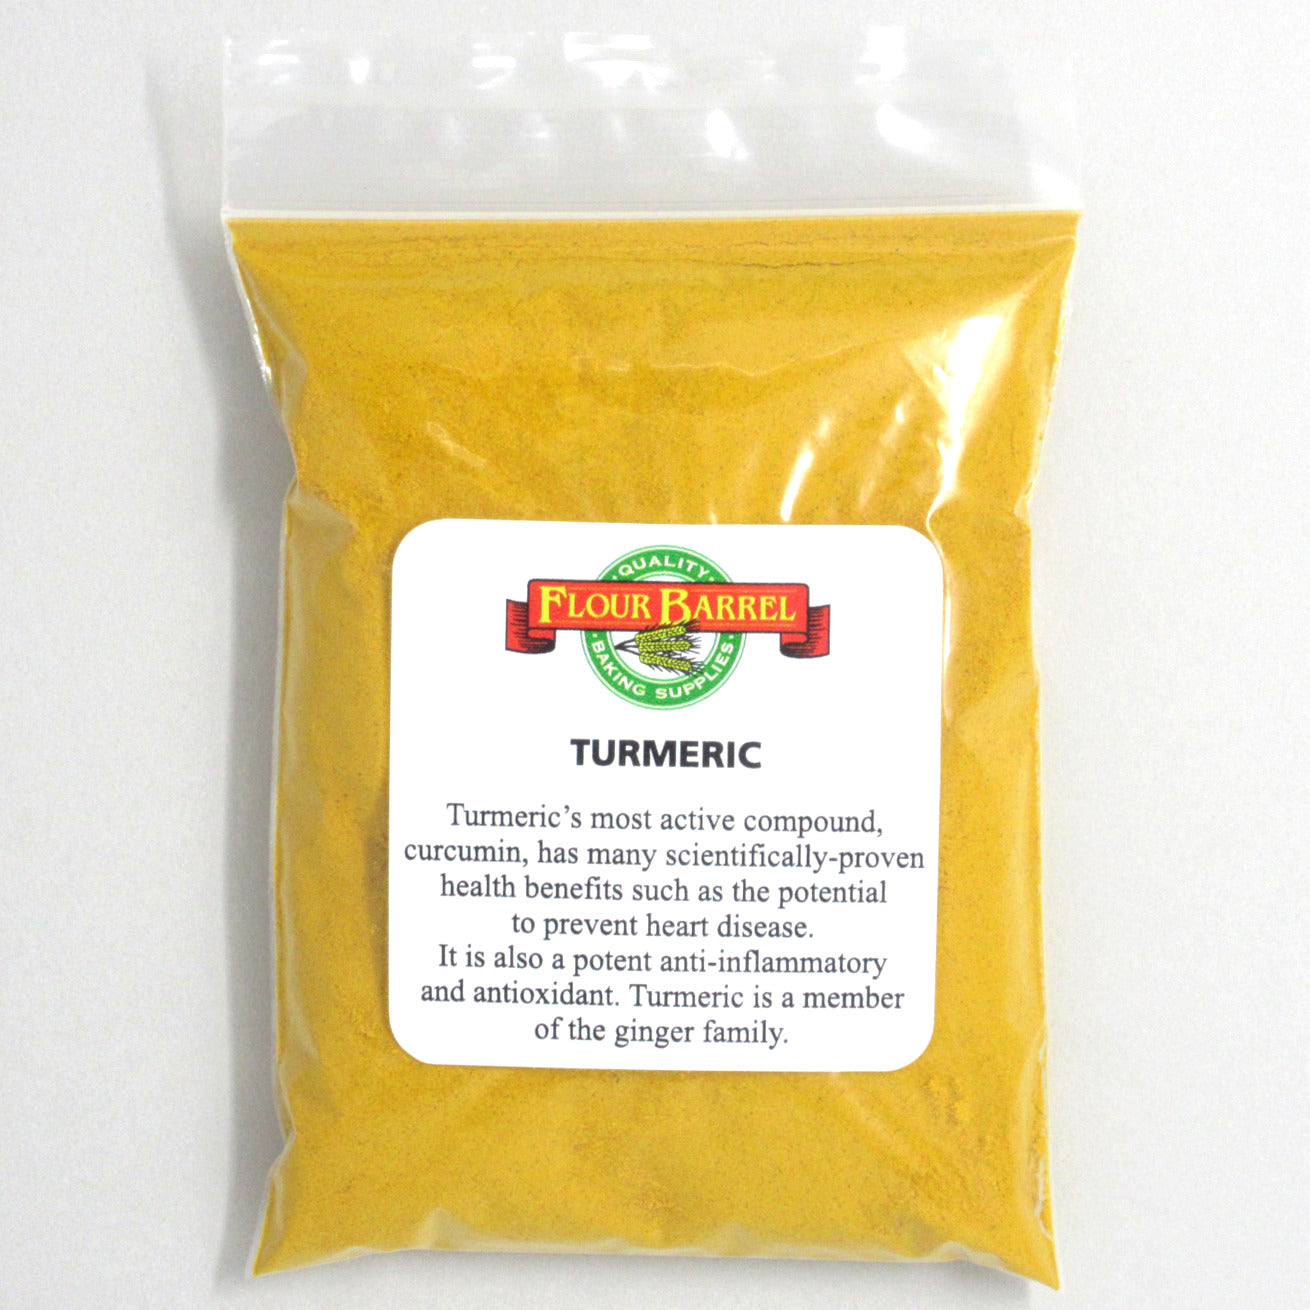 Flour Barrel product image - Turmeric